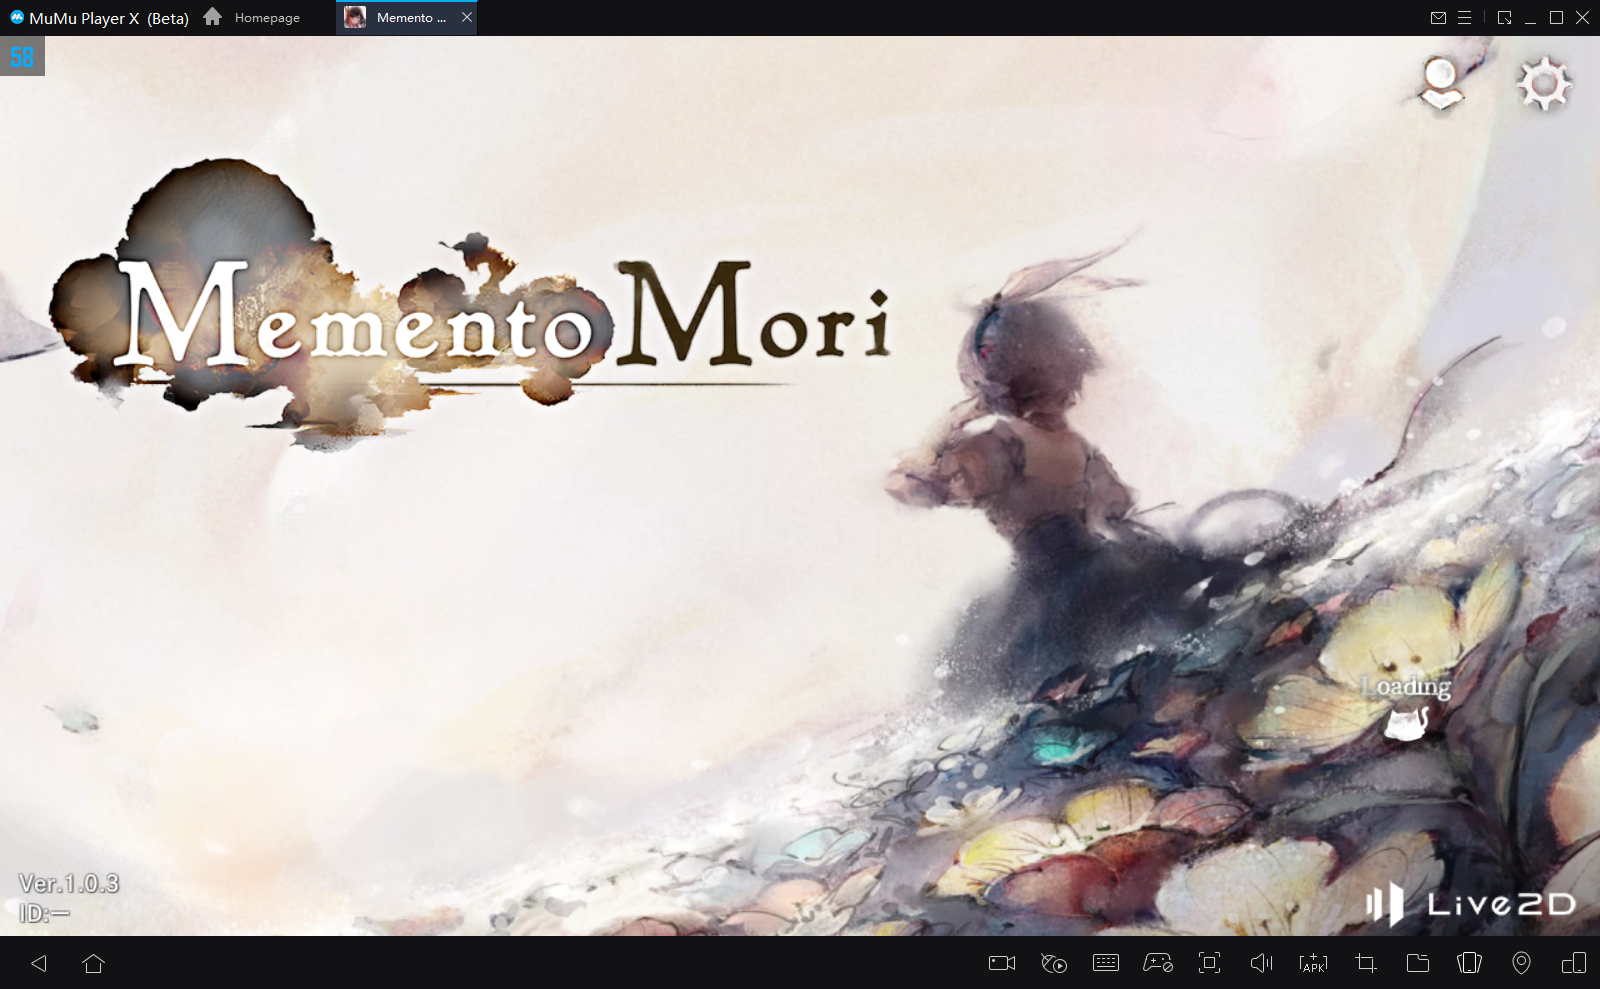 How to Play MementoMori: AFKRPG on PC with MuMu Player X